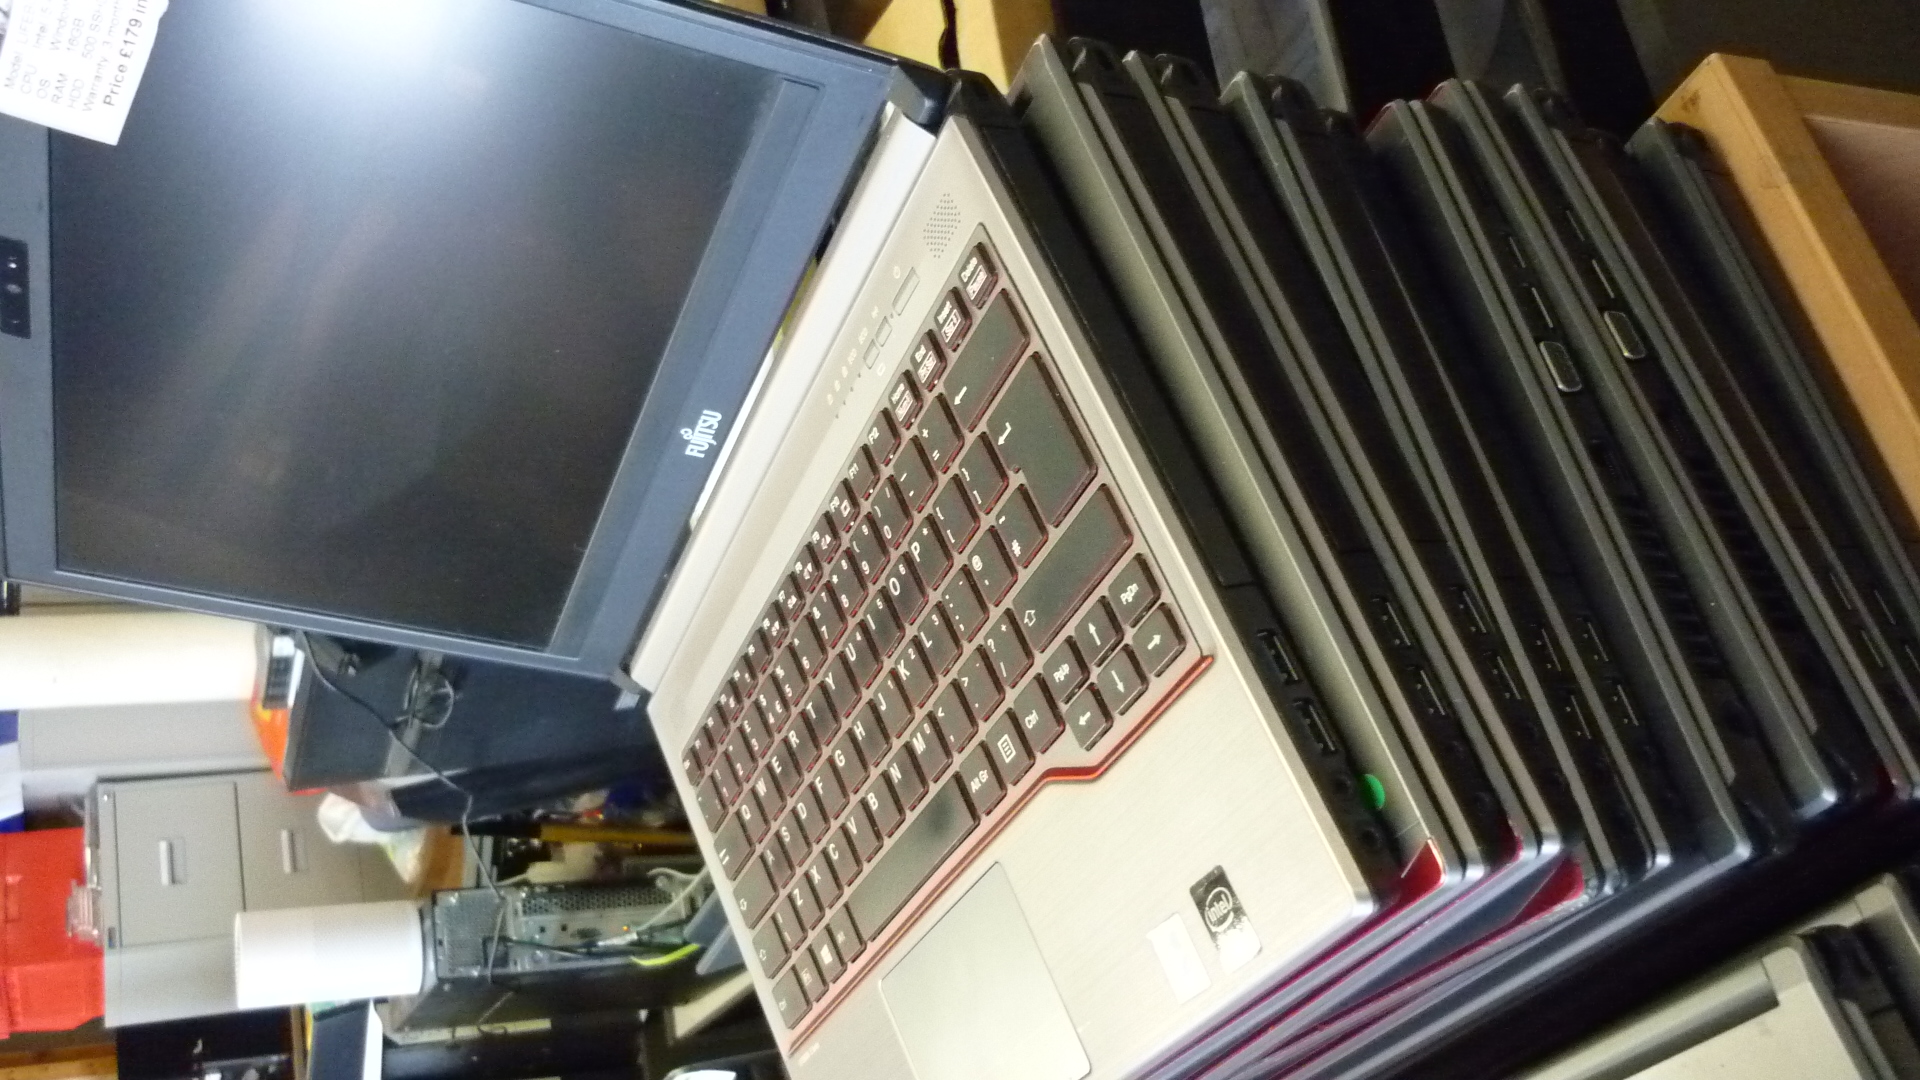 10 E734 base level laptops